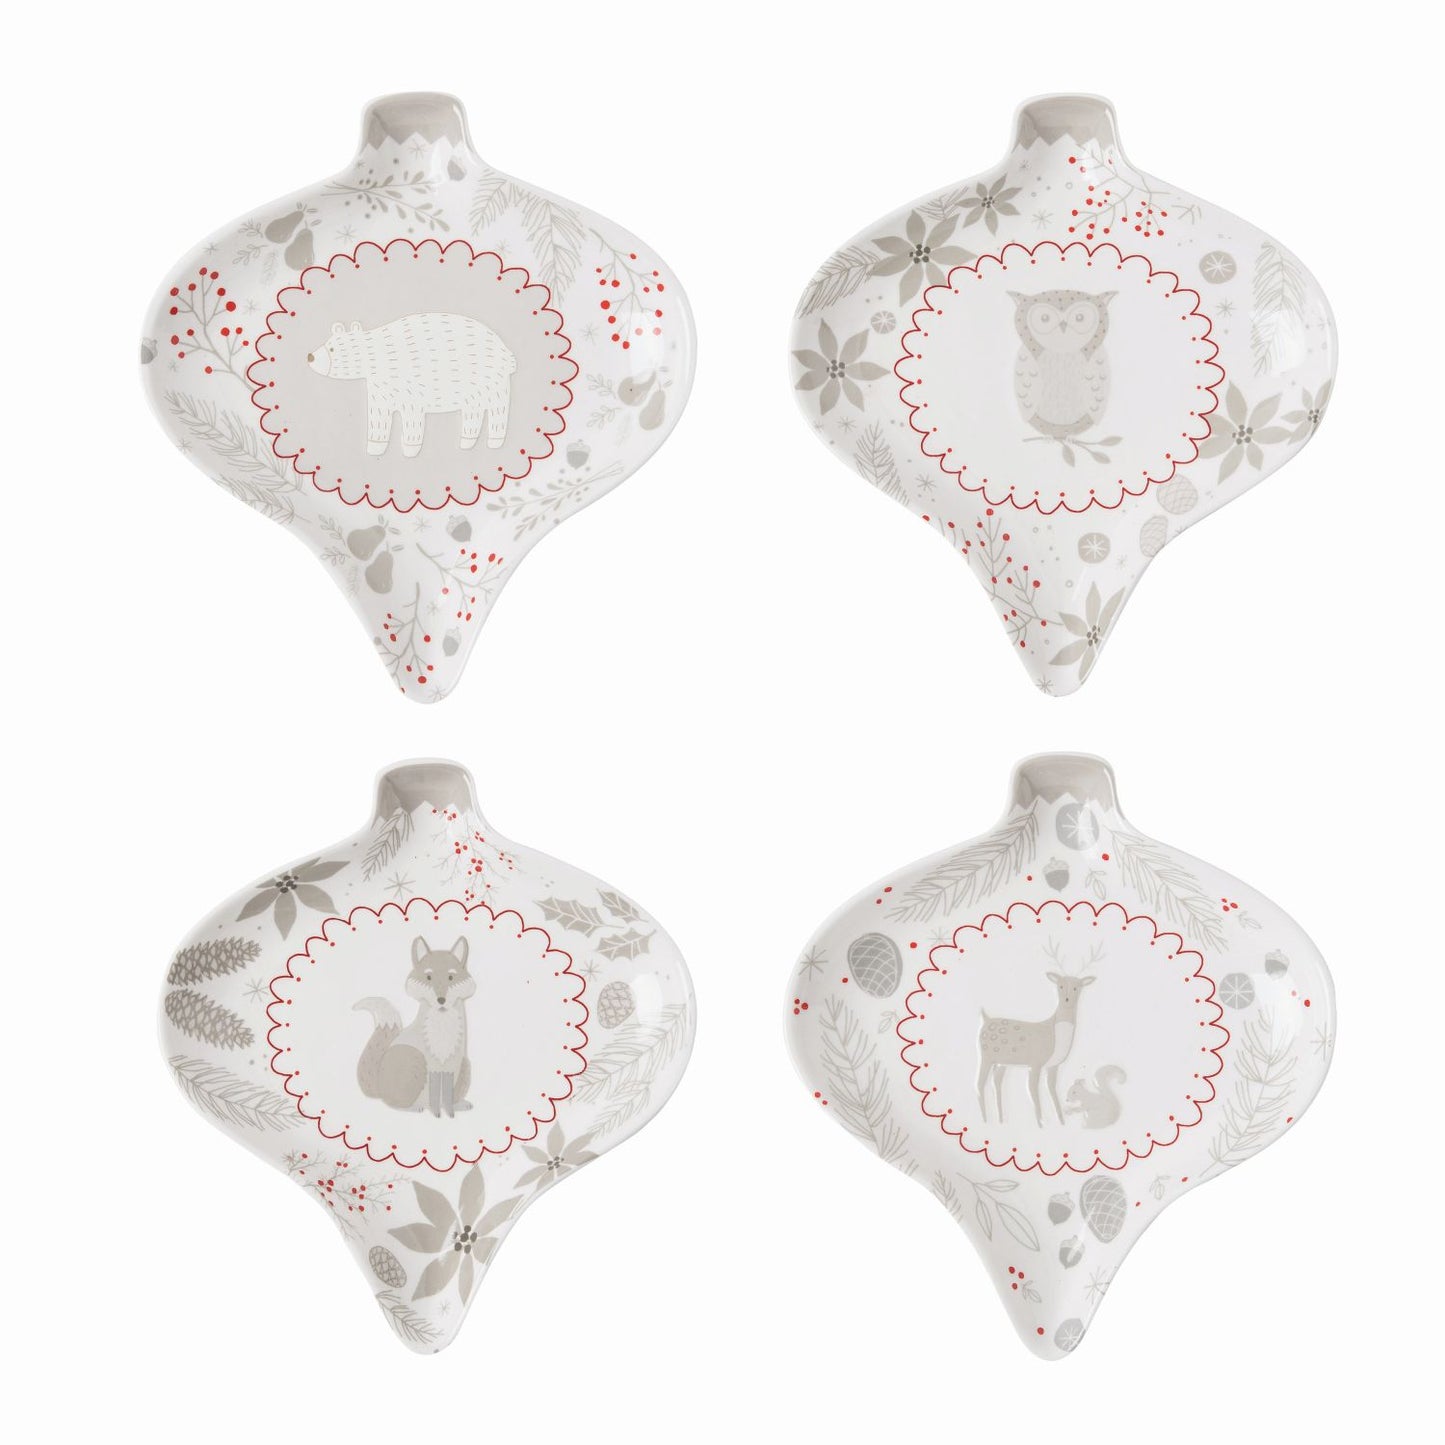 Transpac Ceramic Woodland Ornament Shaped Dish, Set Of 4, Assortment